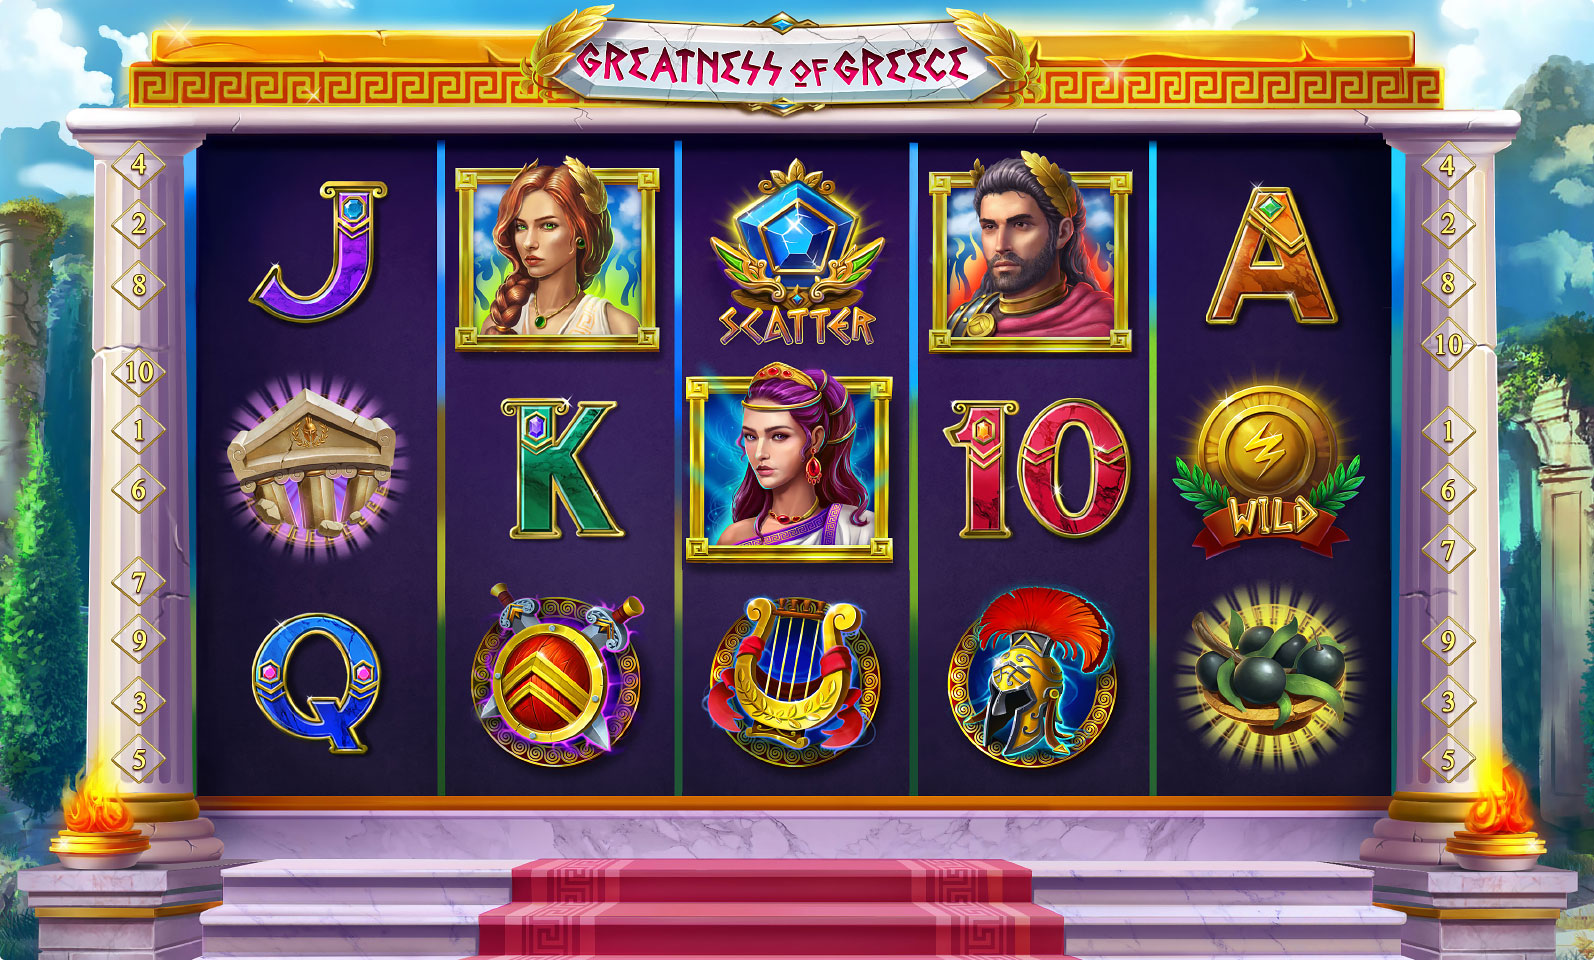 Greatness of Greece - Slot Machine Game Theme Design